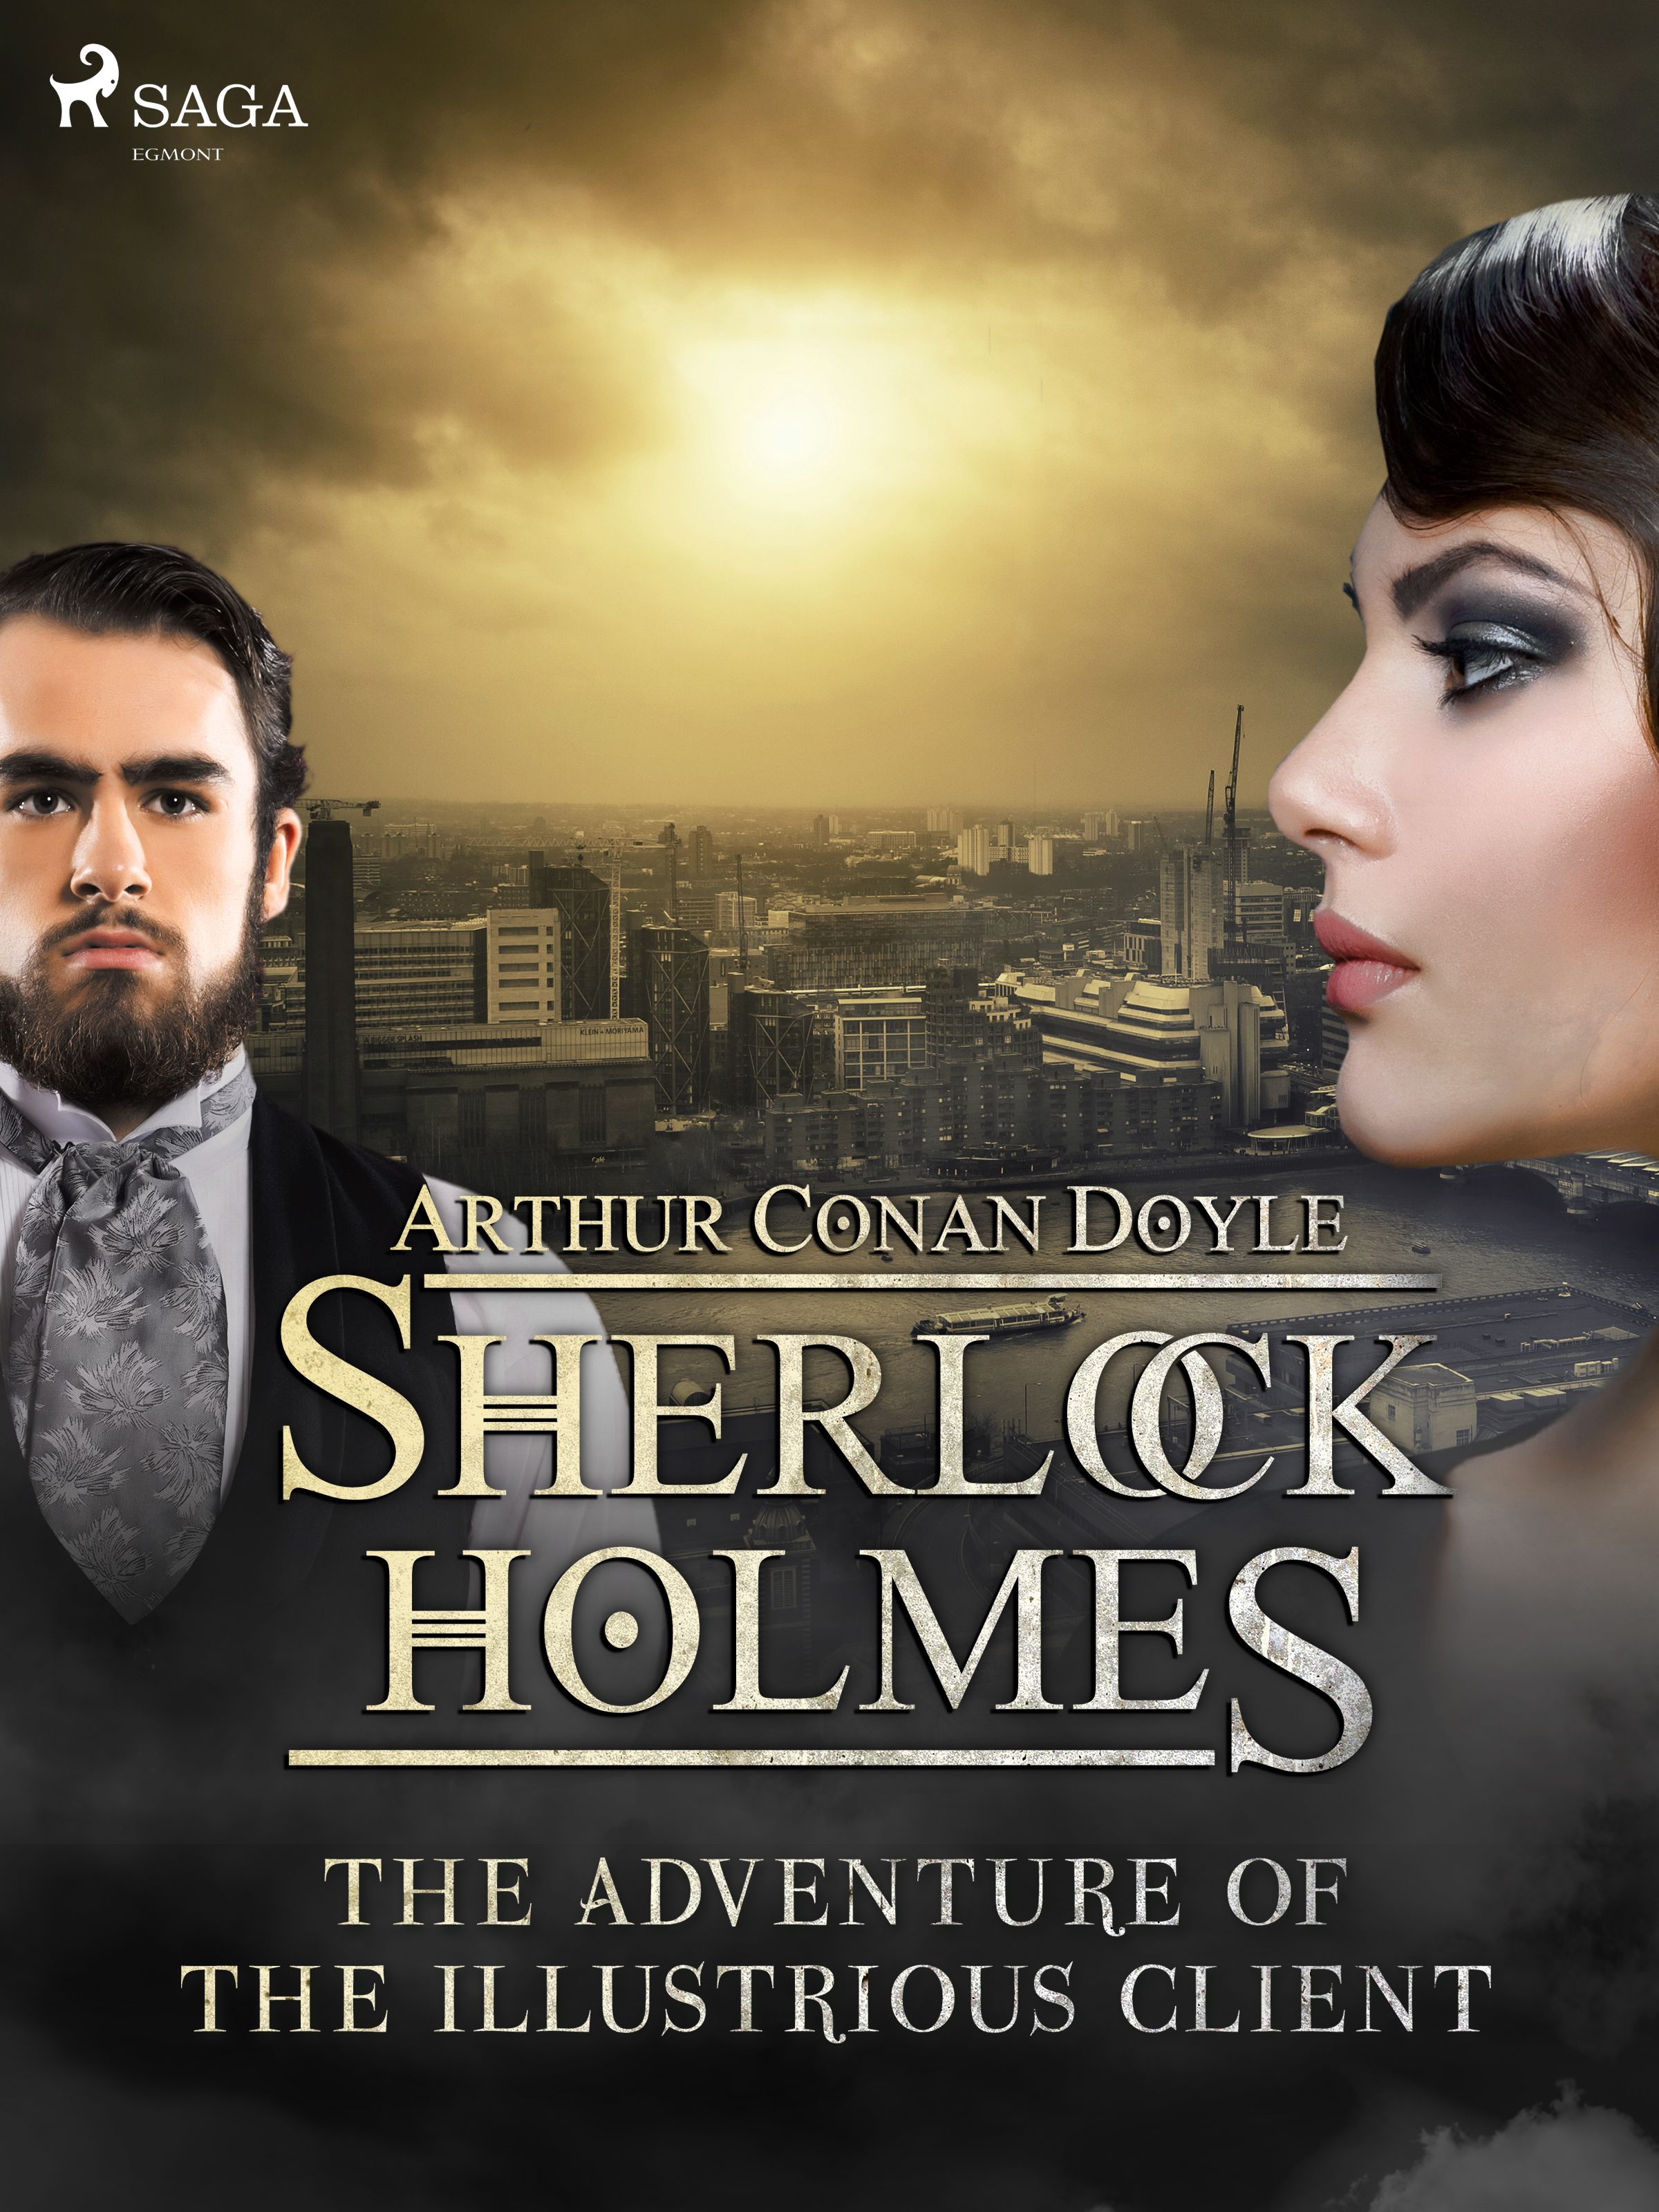 The Adventure of the Illustrious Client, e-bok av Arthur Conan Doyle